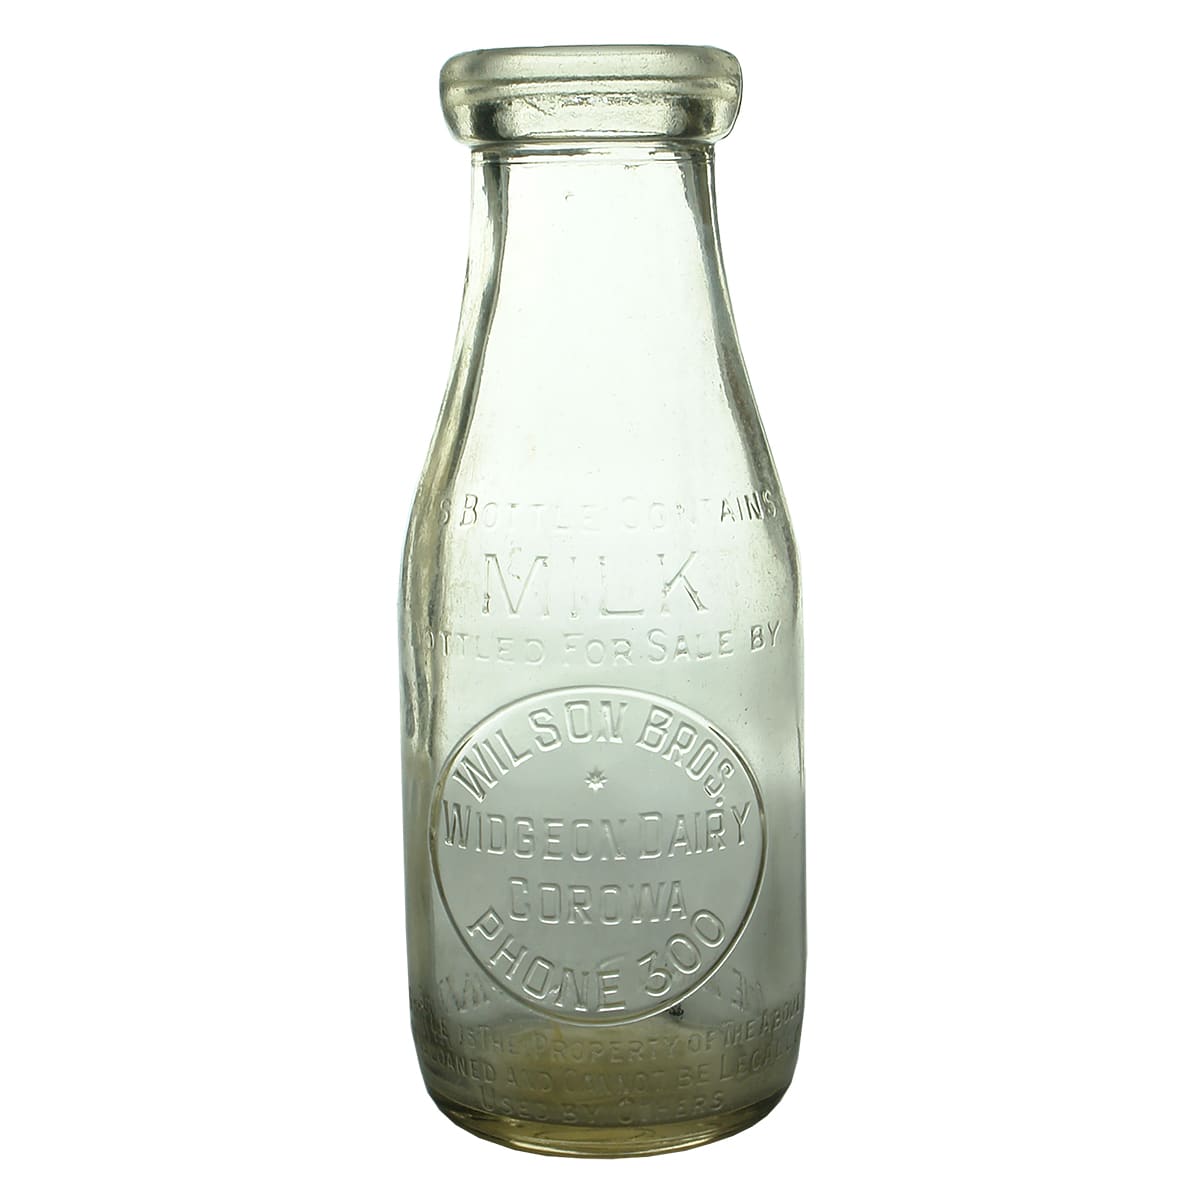 Milk. Wilson Bros., Widgeon Dairy, Corowa. Wad lip. 1 Pint.